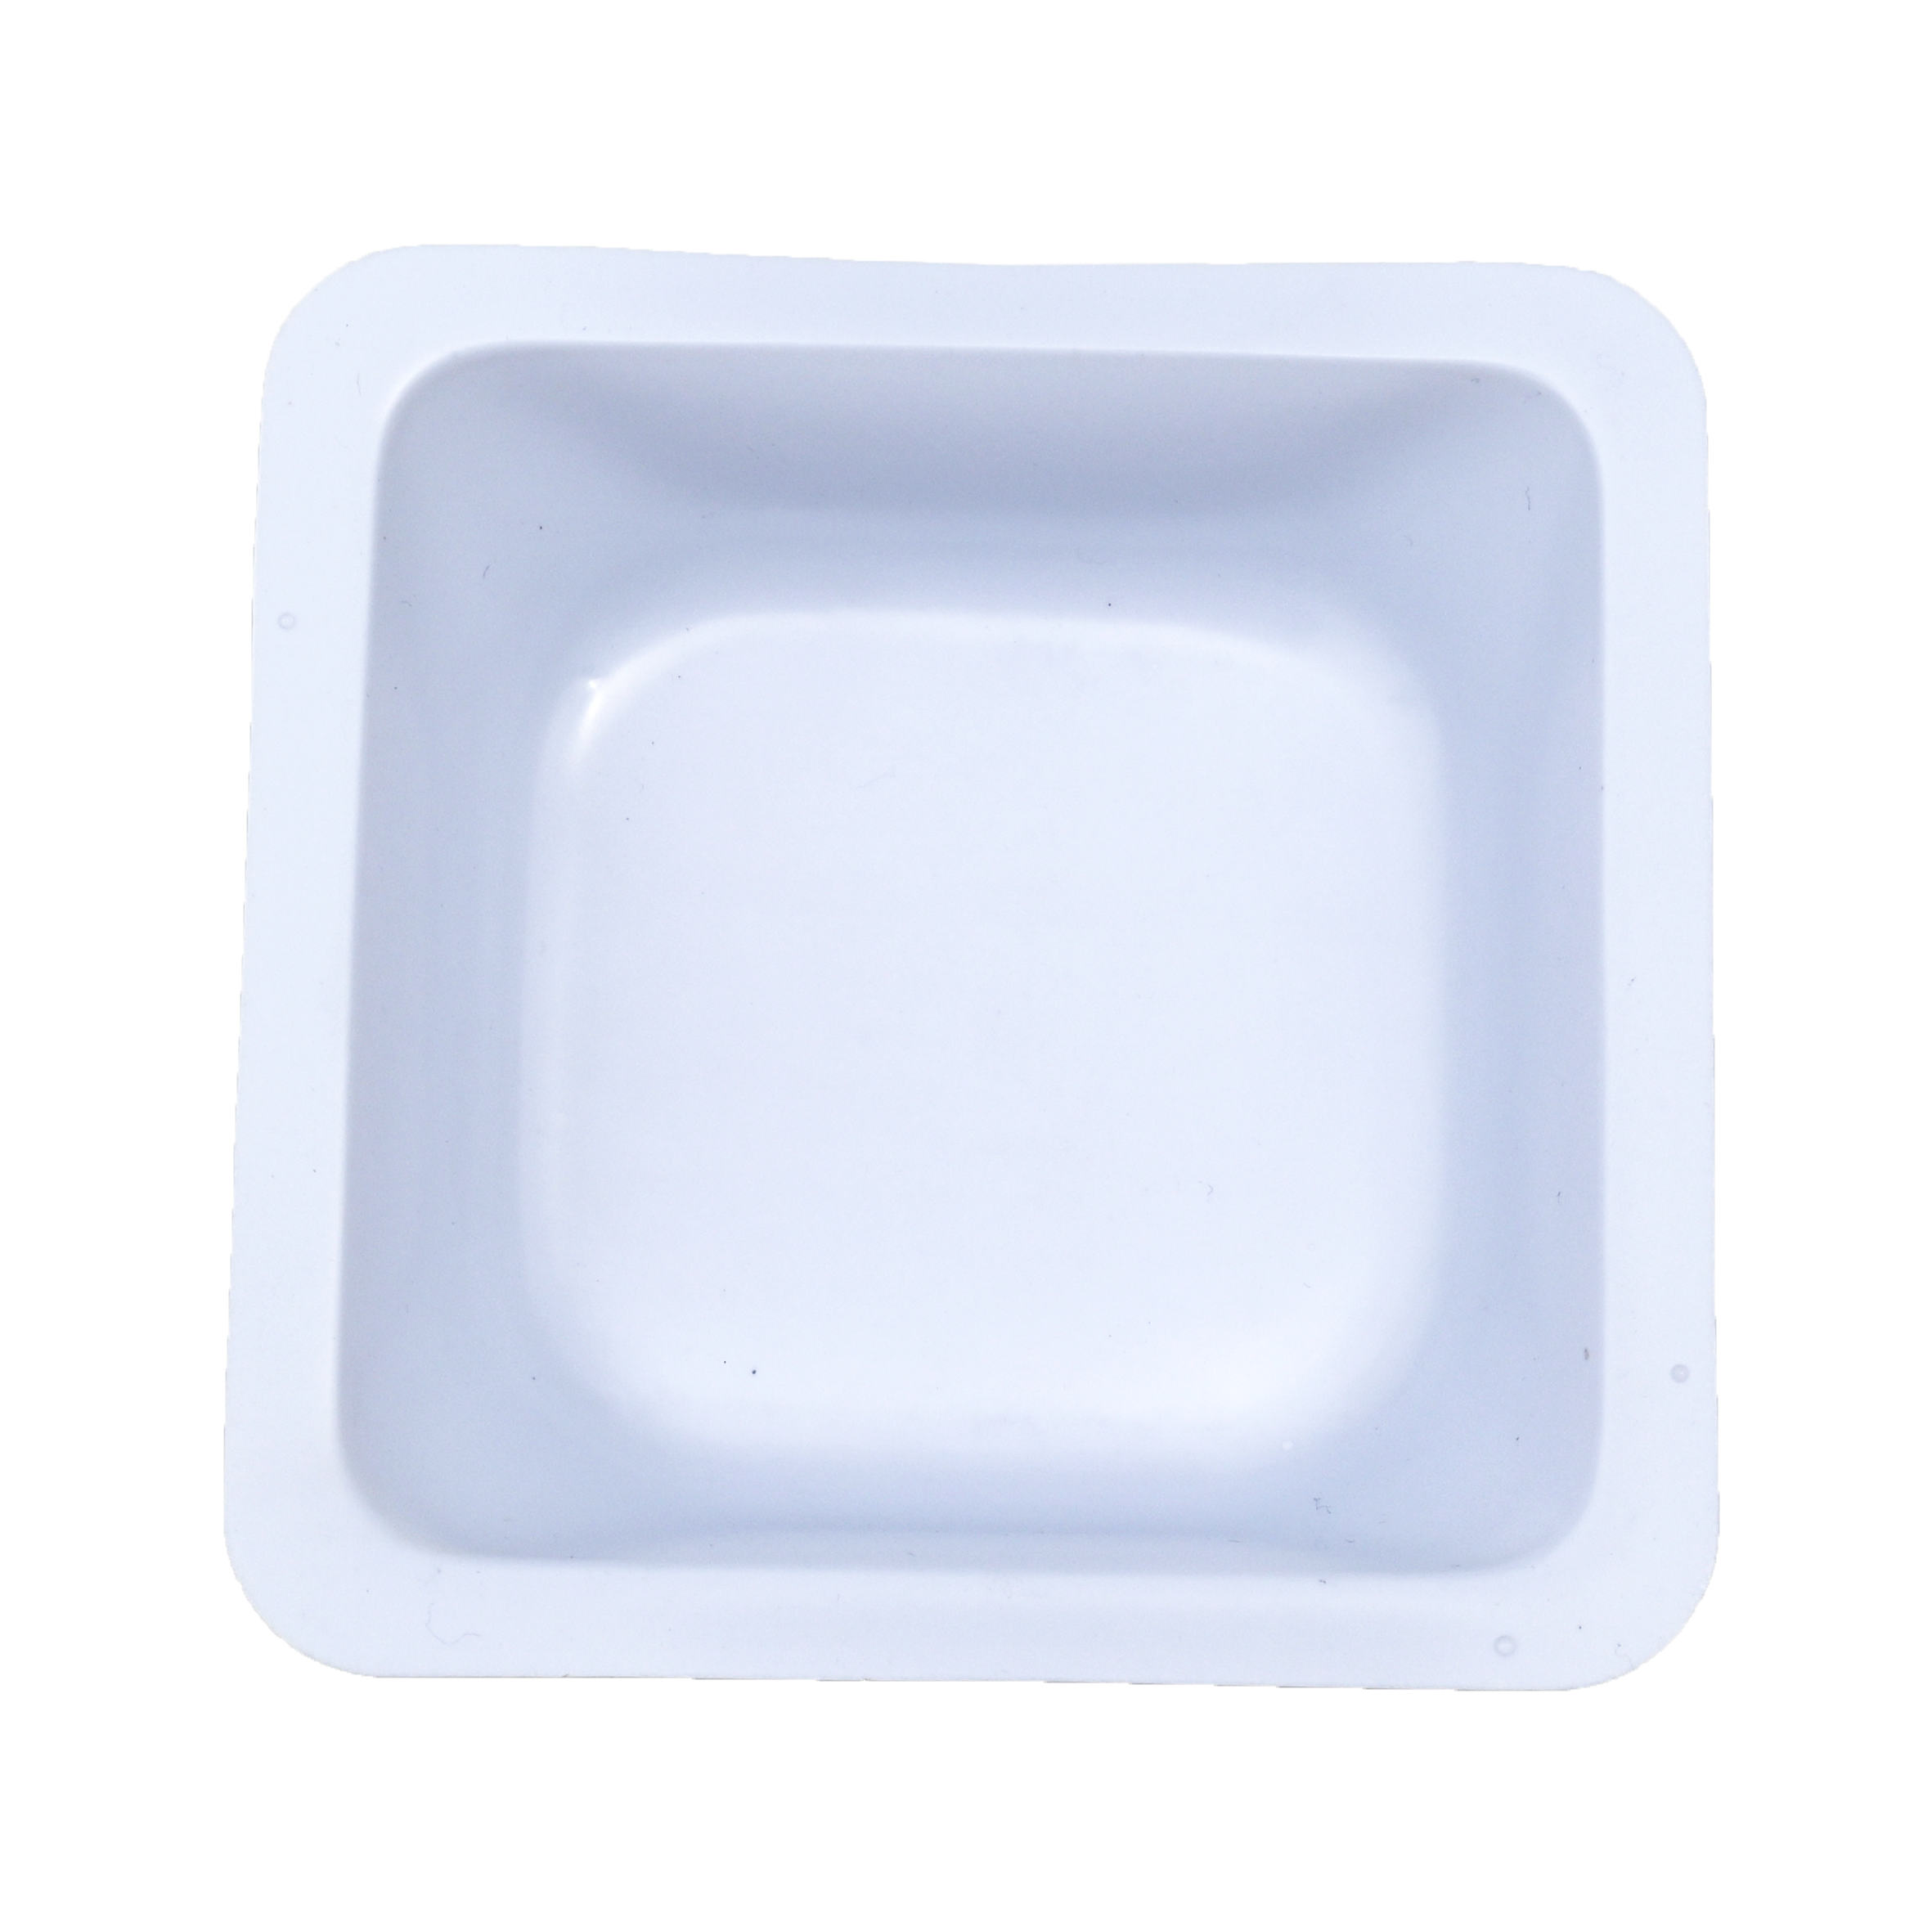 Diaguru Weighing Tray PS Material Disposable, White Colour 500pcs/Box